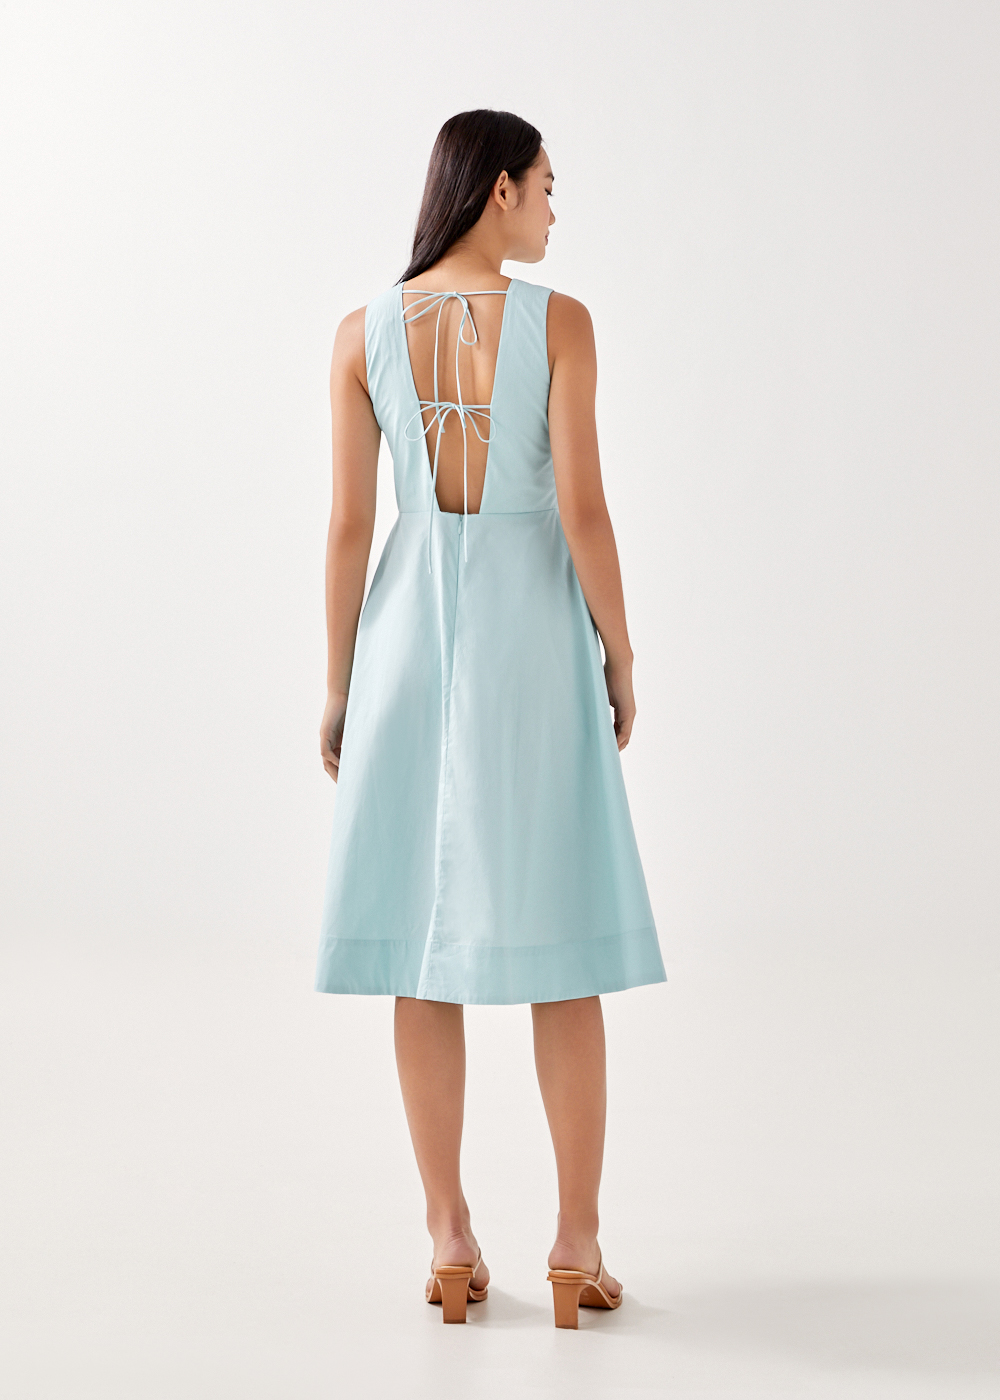 Dresses | Shop New Arrivals Online | Love, Bonito | Women's Fashion